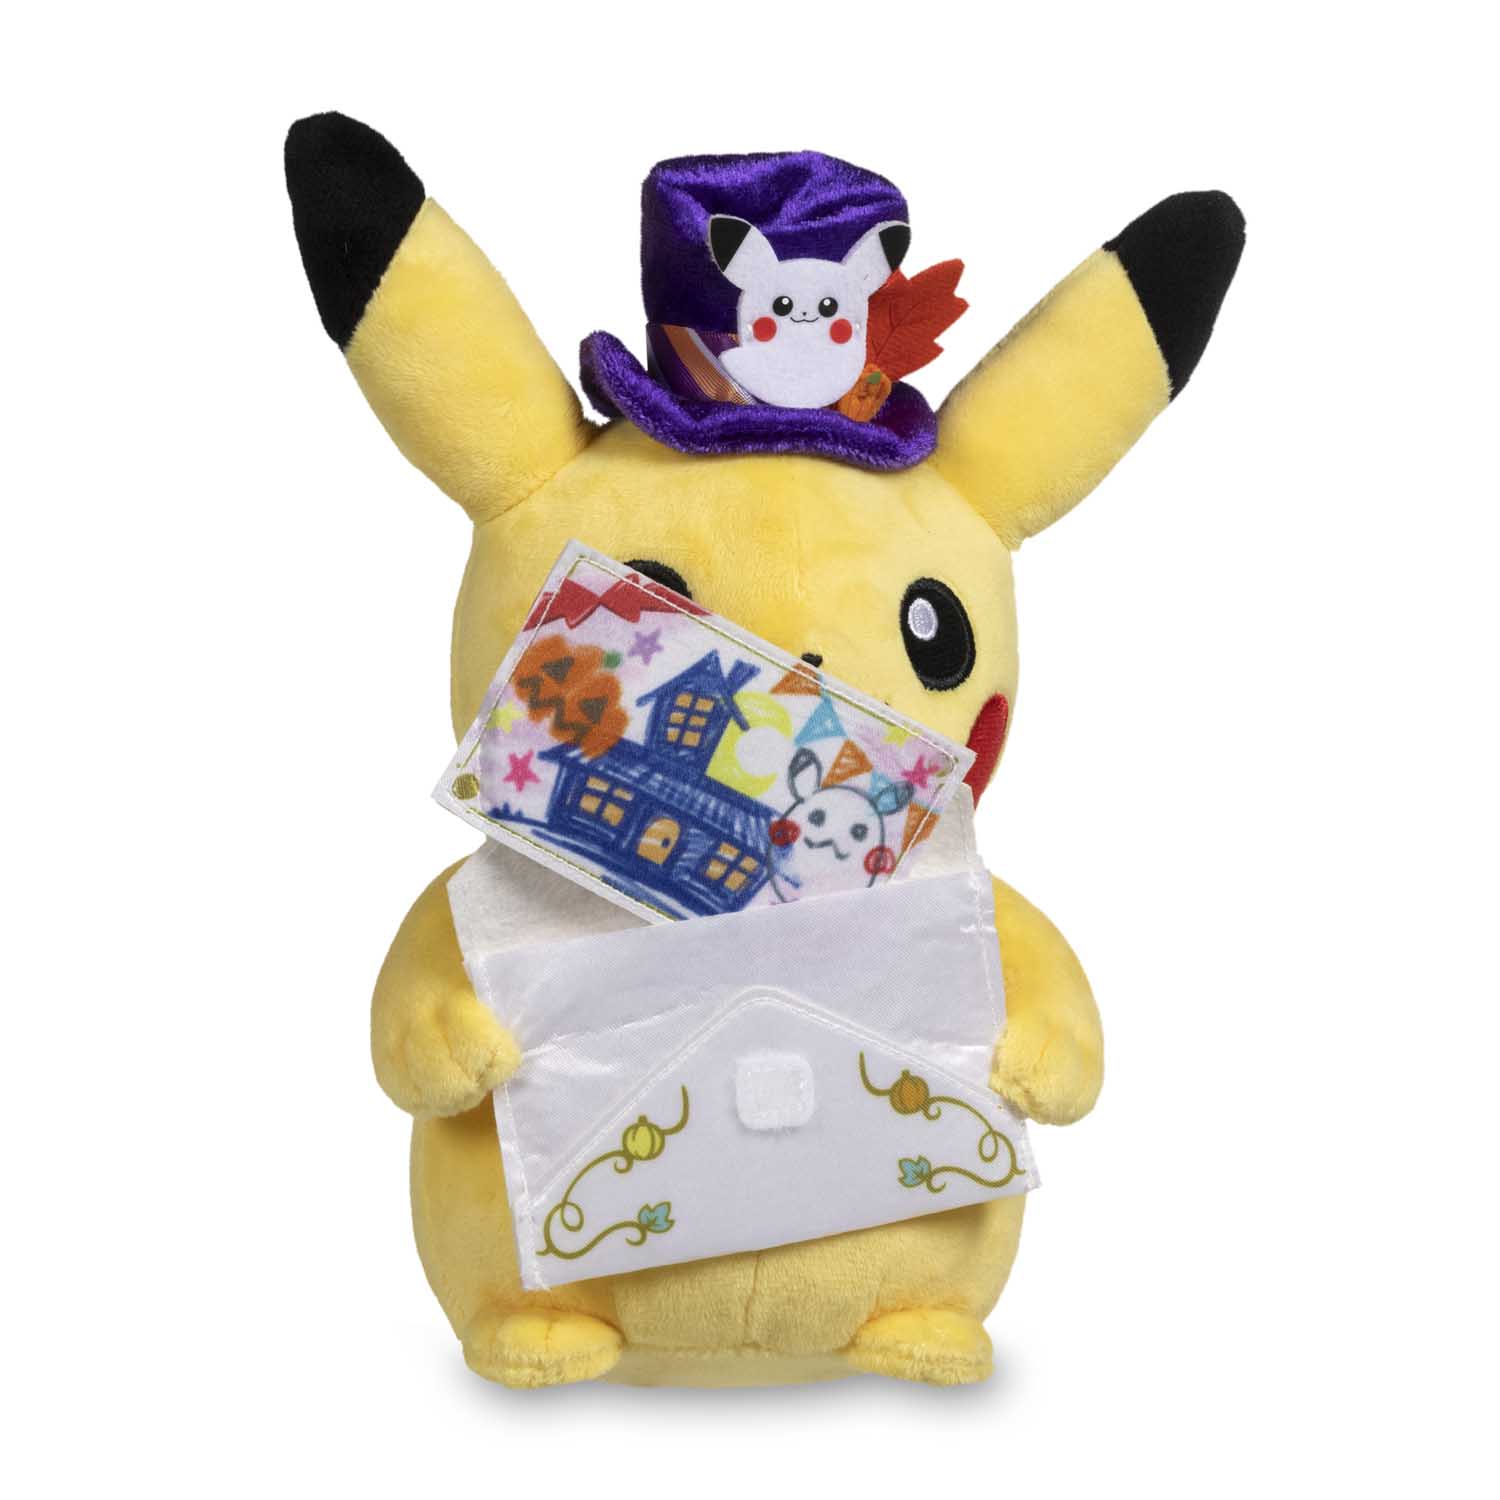 2019 Pikachu Pokemon Center Original Plush Doll Halloween Festival